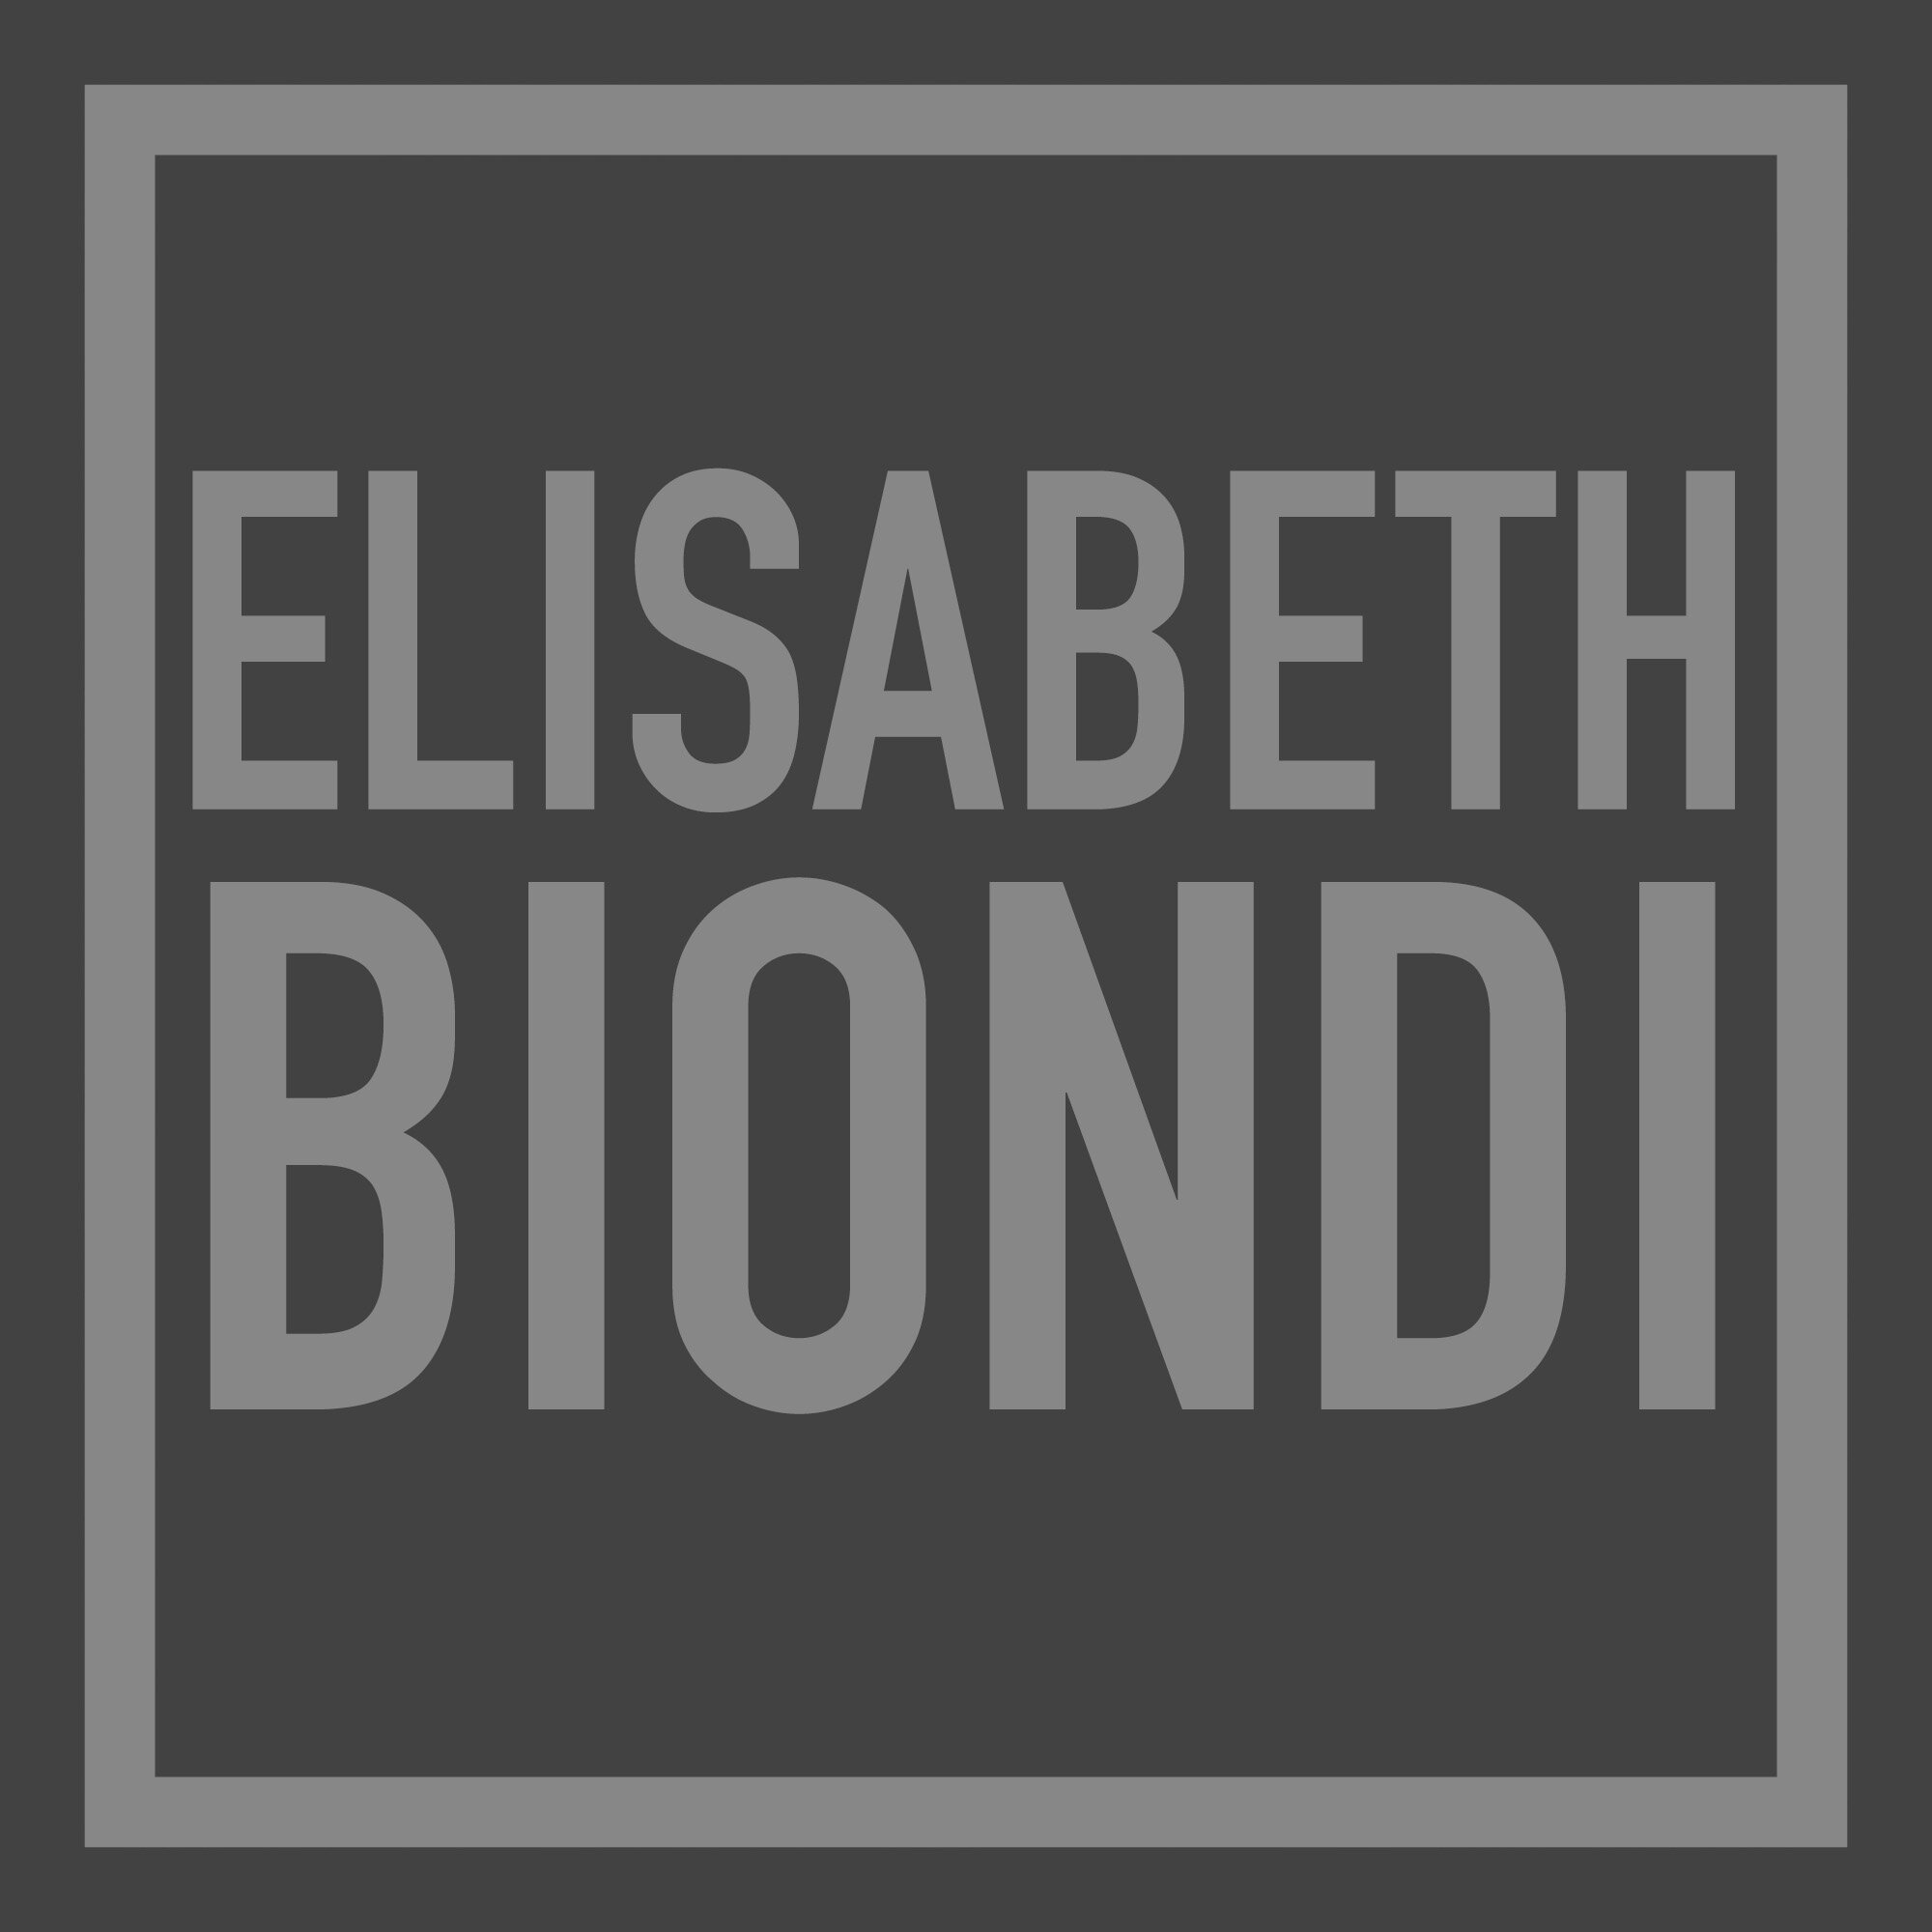 Elisabeth Biondi